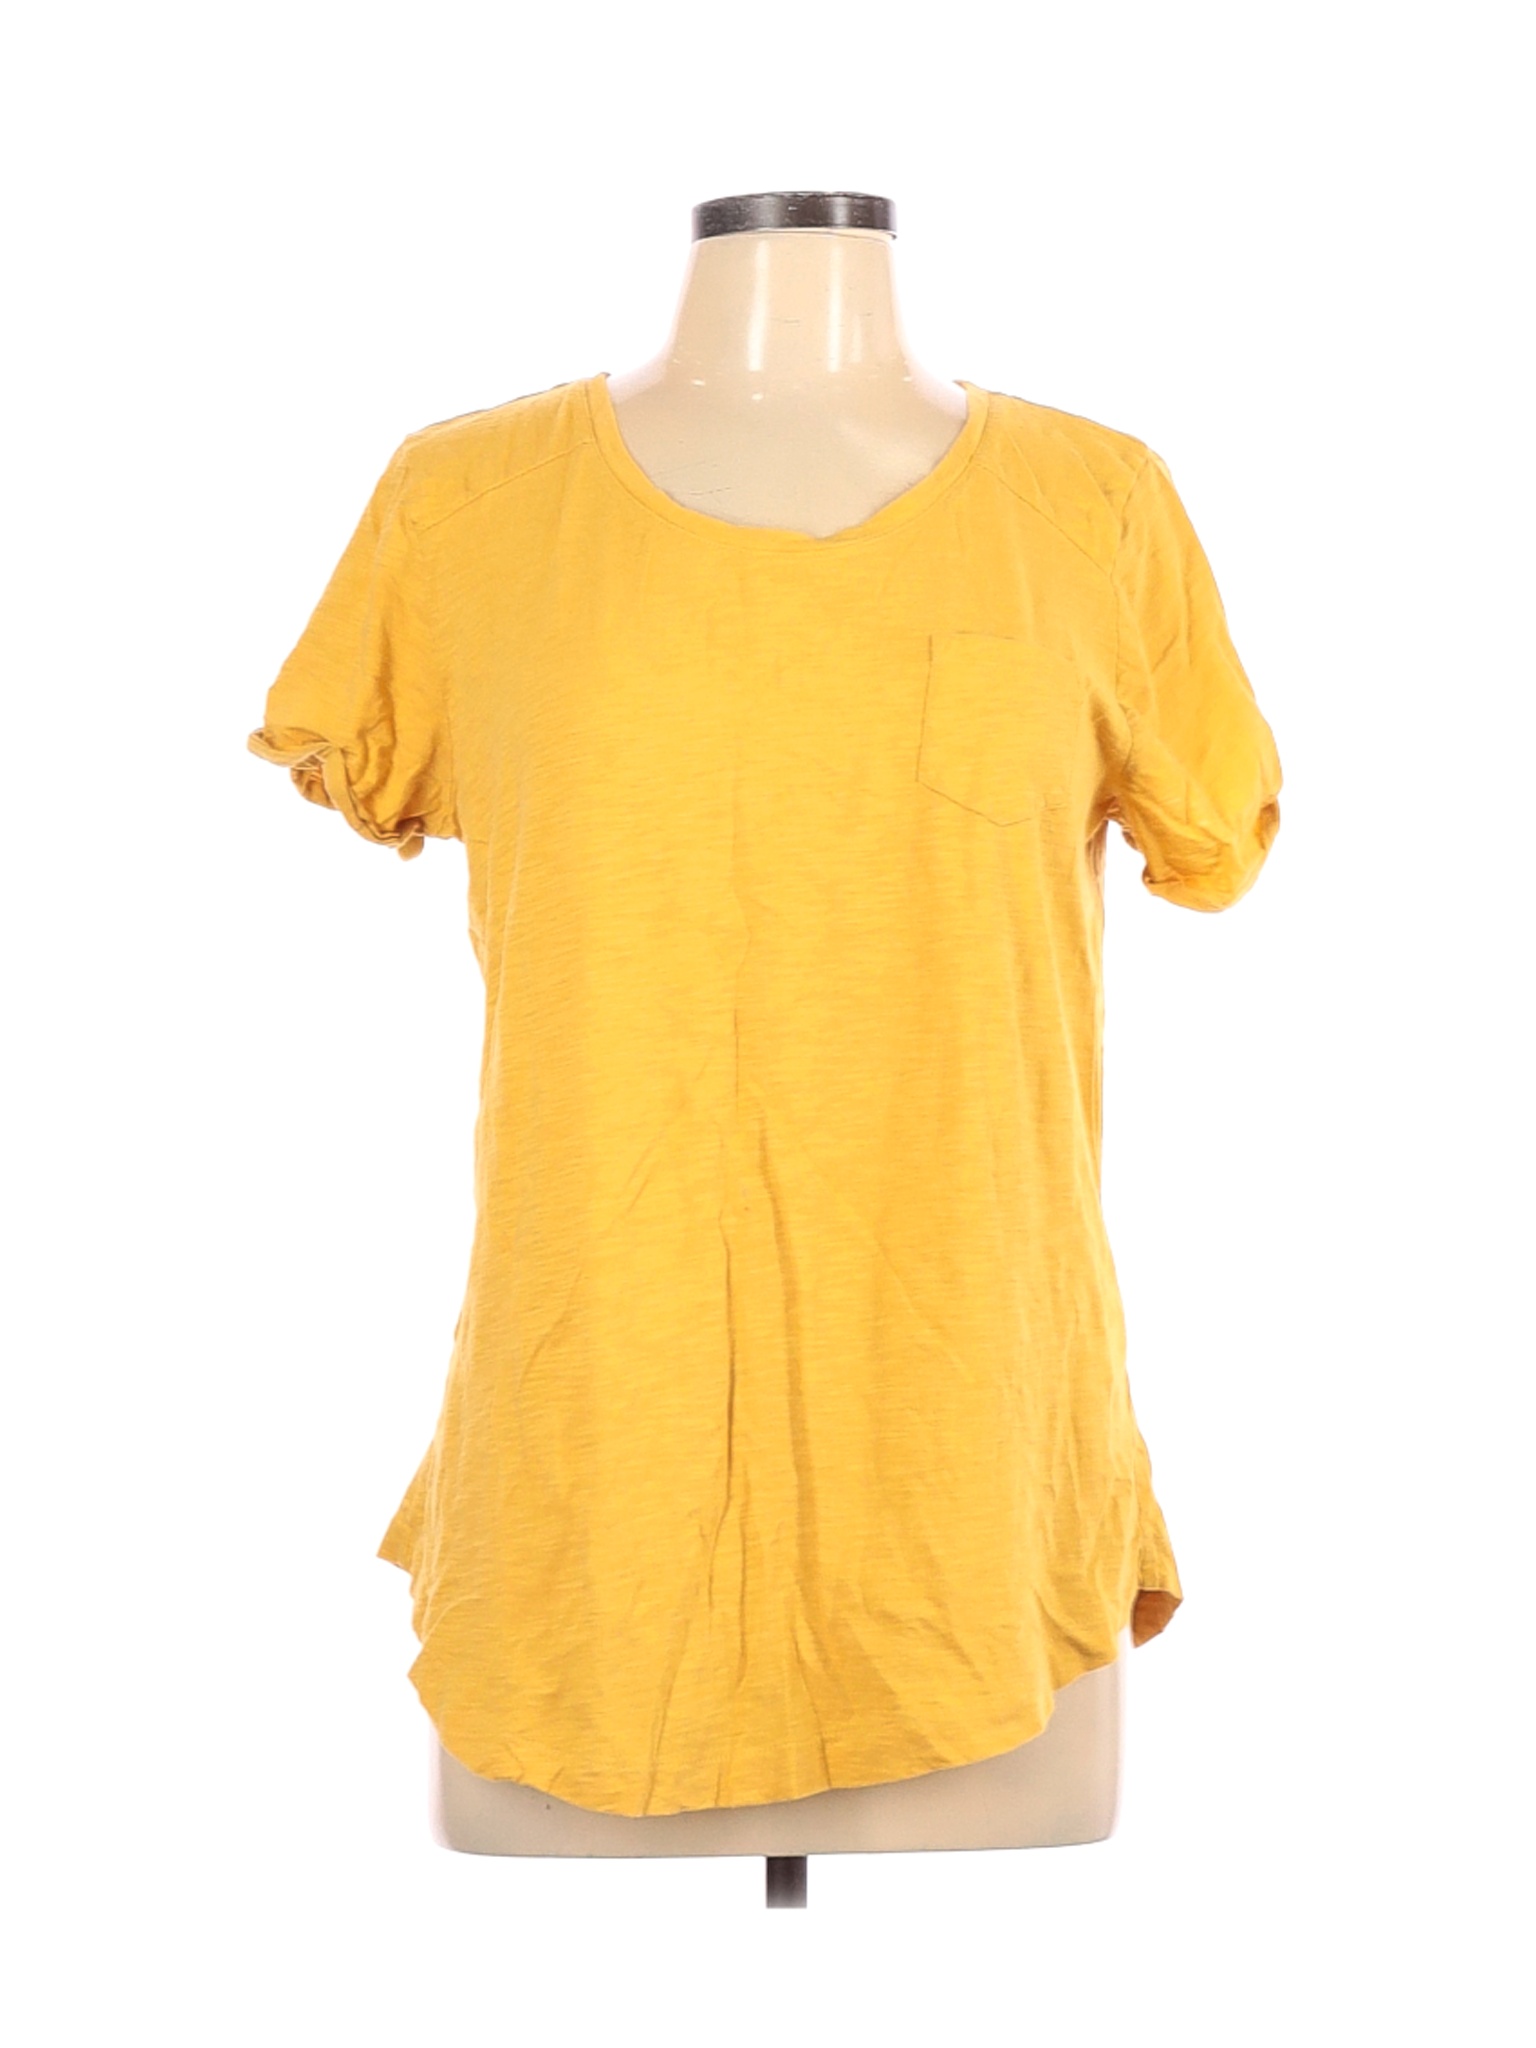 Style&Co Women Yellow Short Sleeve T-Shirt L | eBay